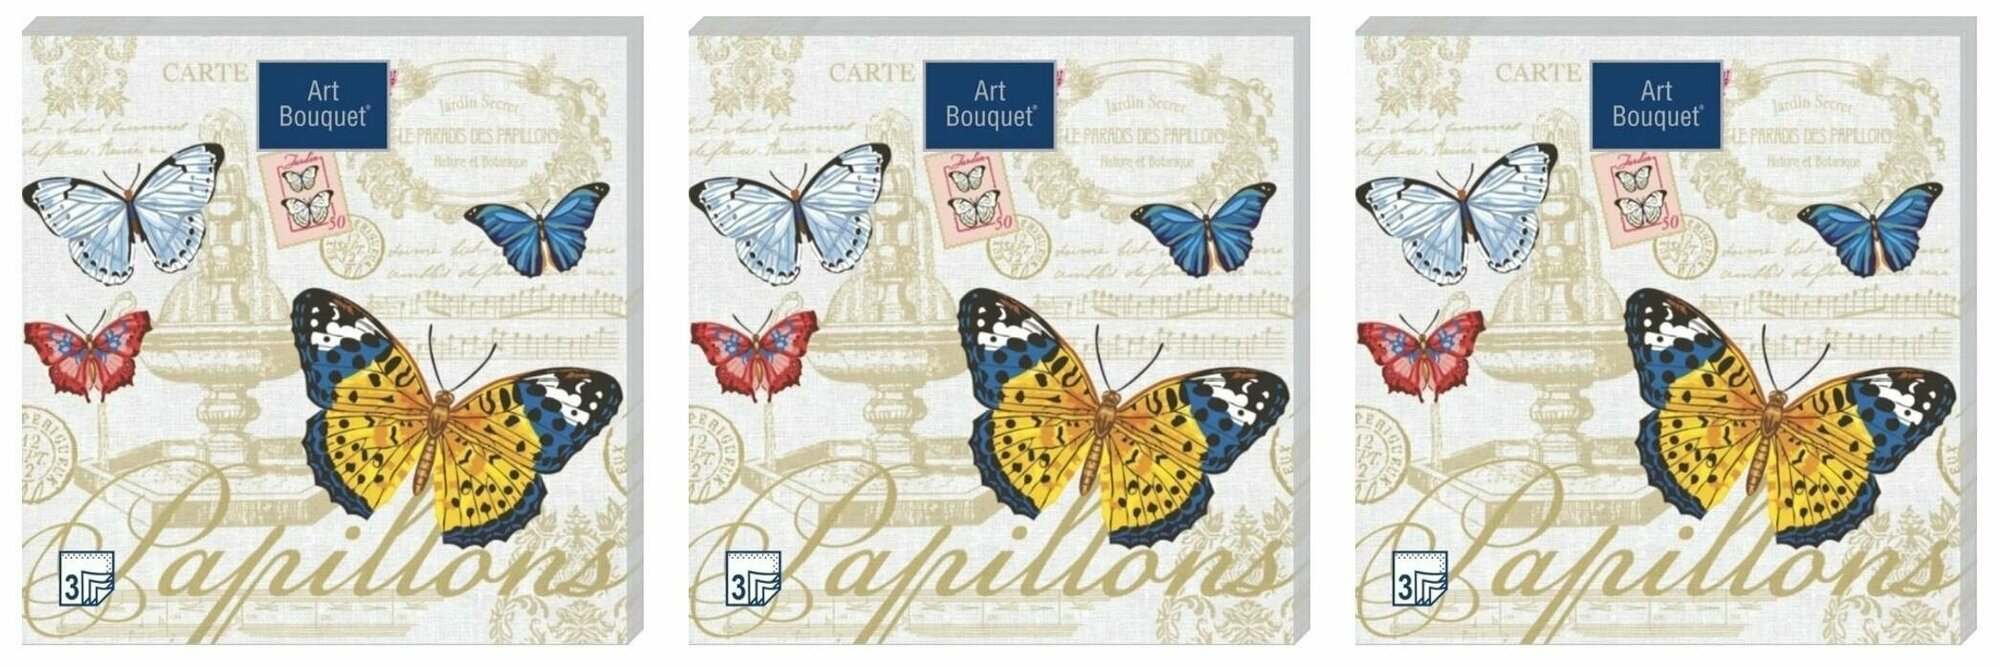 Bouquet Art Салфетки Бабочки, 3 слоя, 33 х 33 см, 20 шт/уп, 3 уп